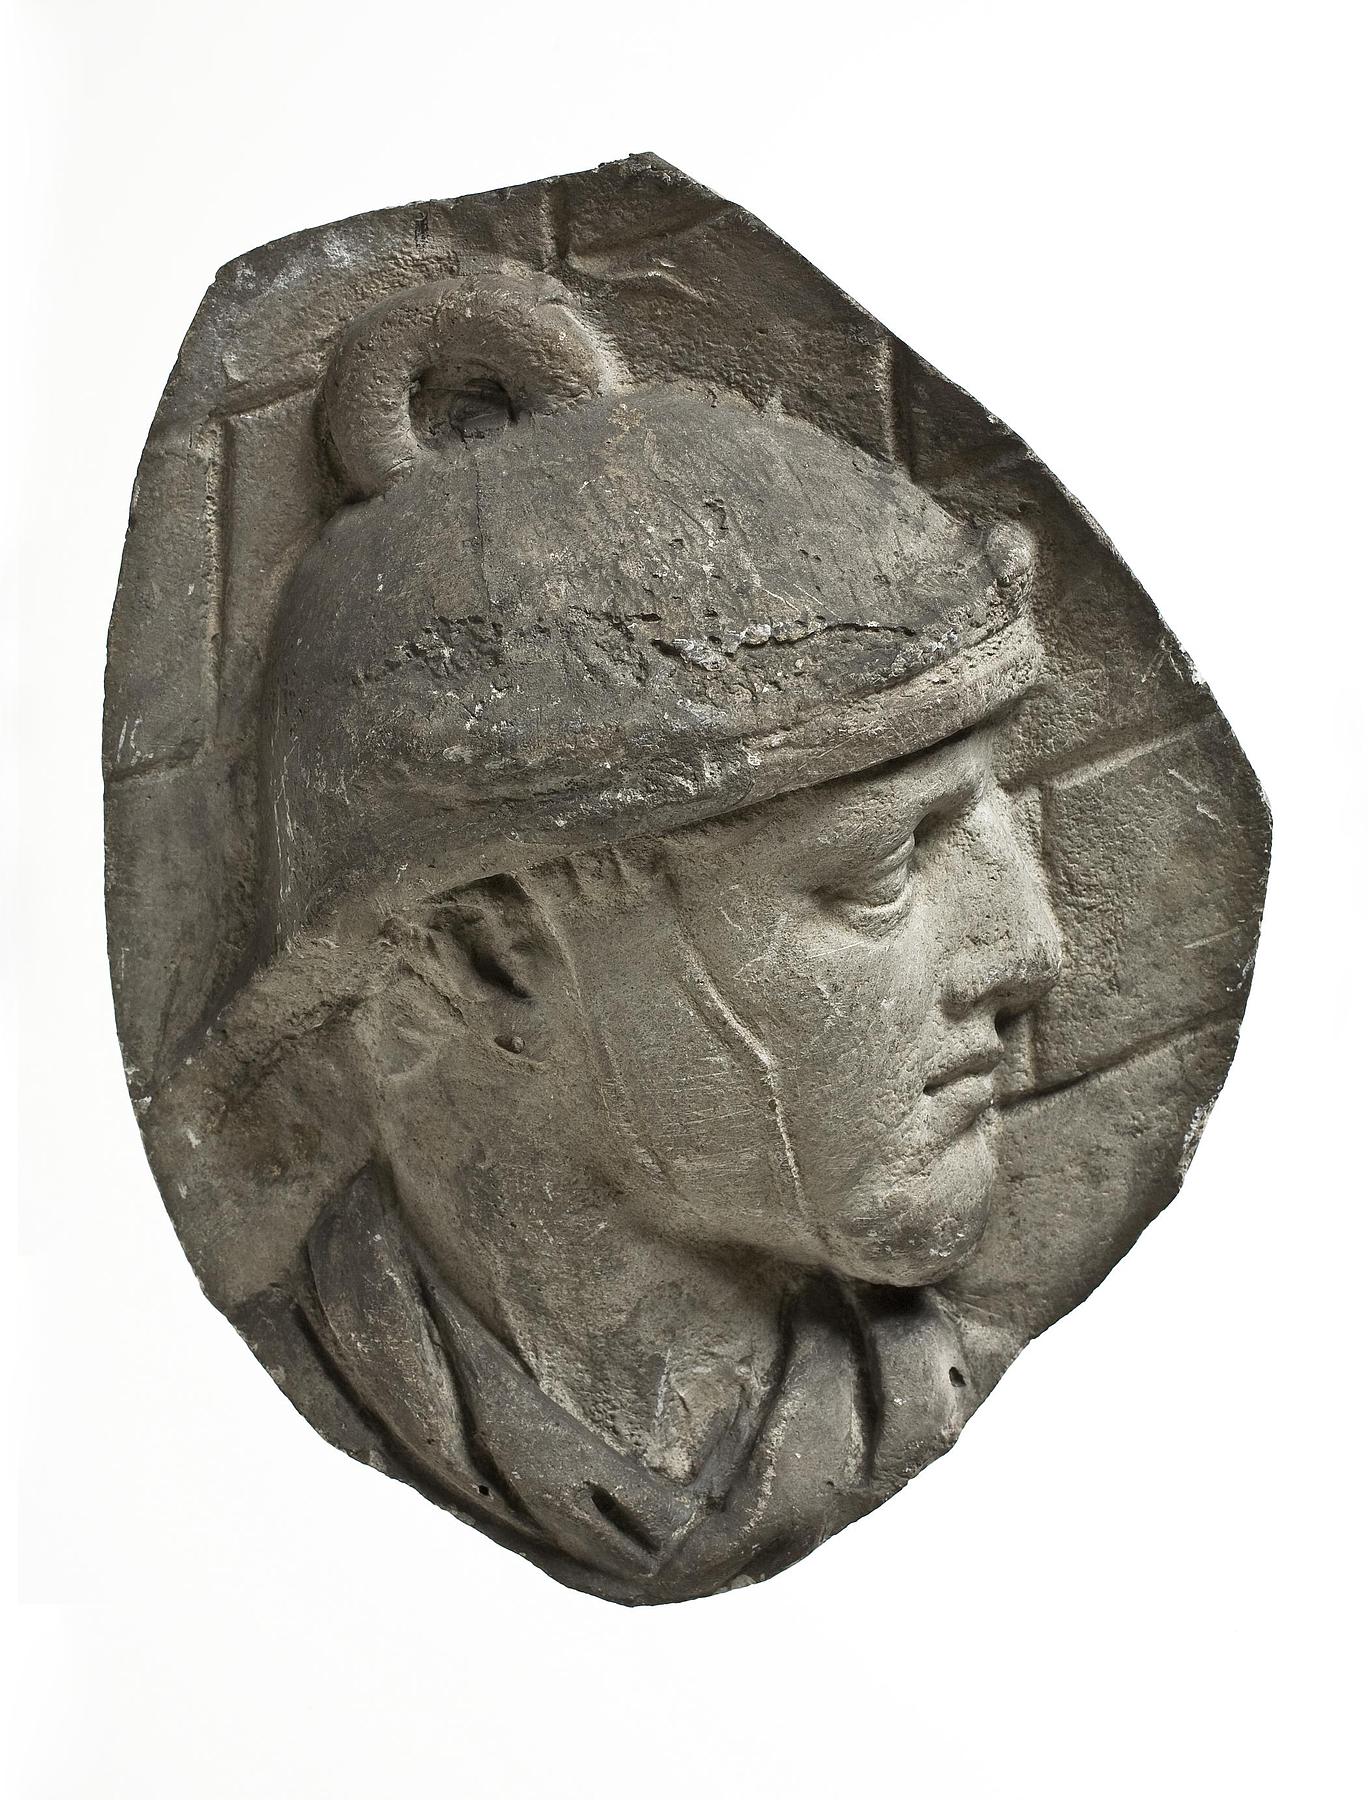 Head of a helmeted legionary, L326m